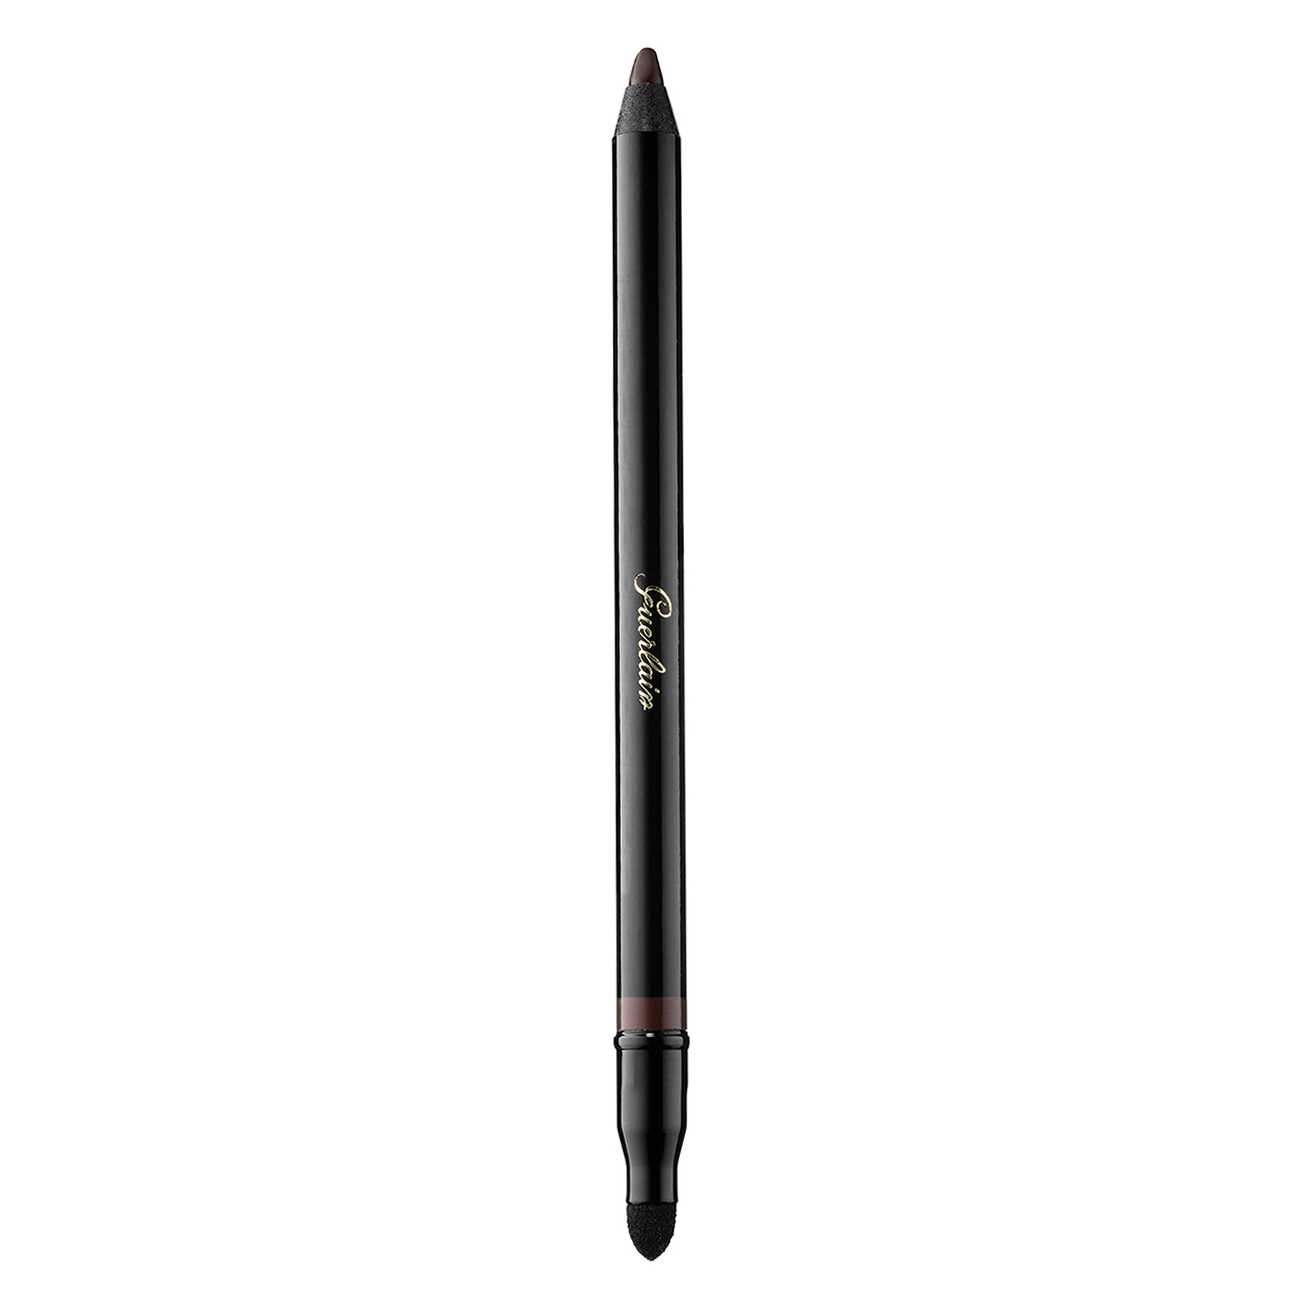 The Eye Pencil 1.08 G Jack Brown 2 Guerlain imagine 2021 bestvalue.eu